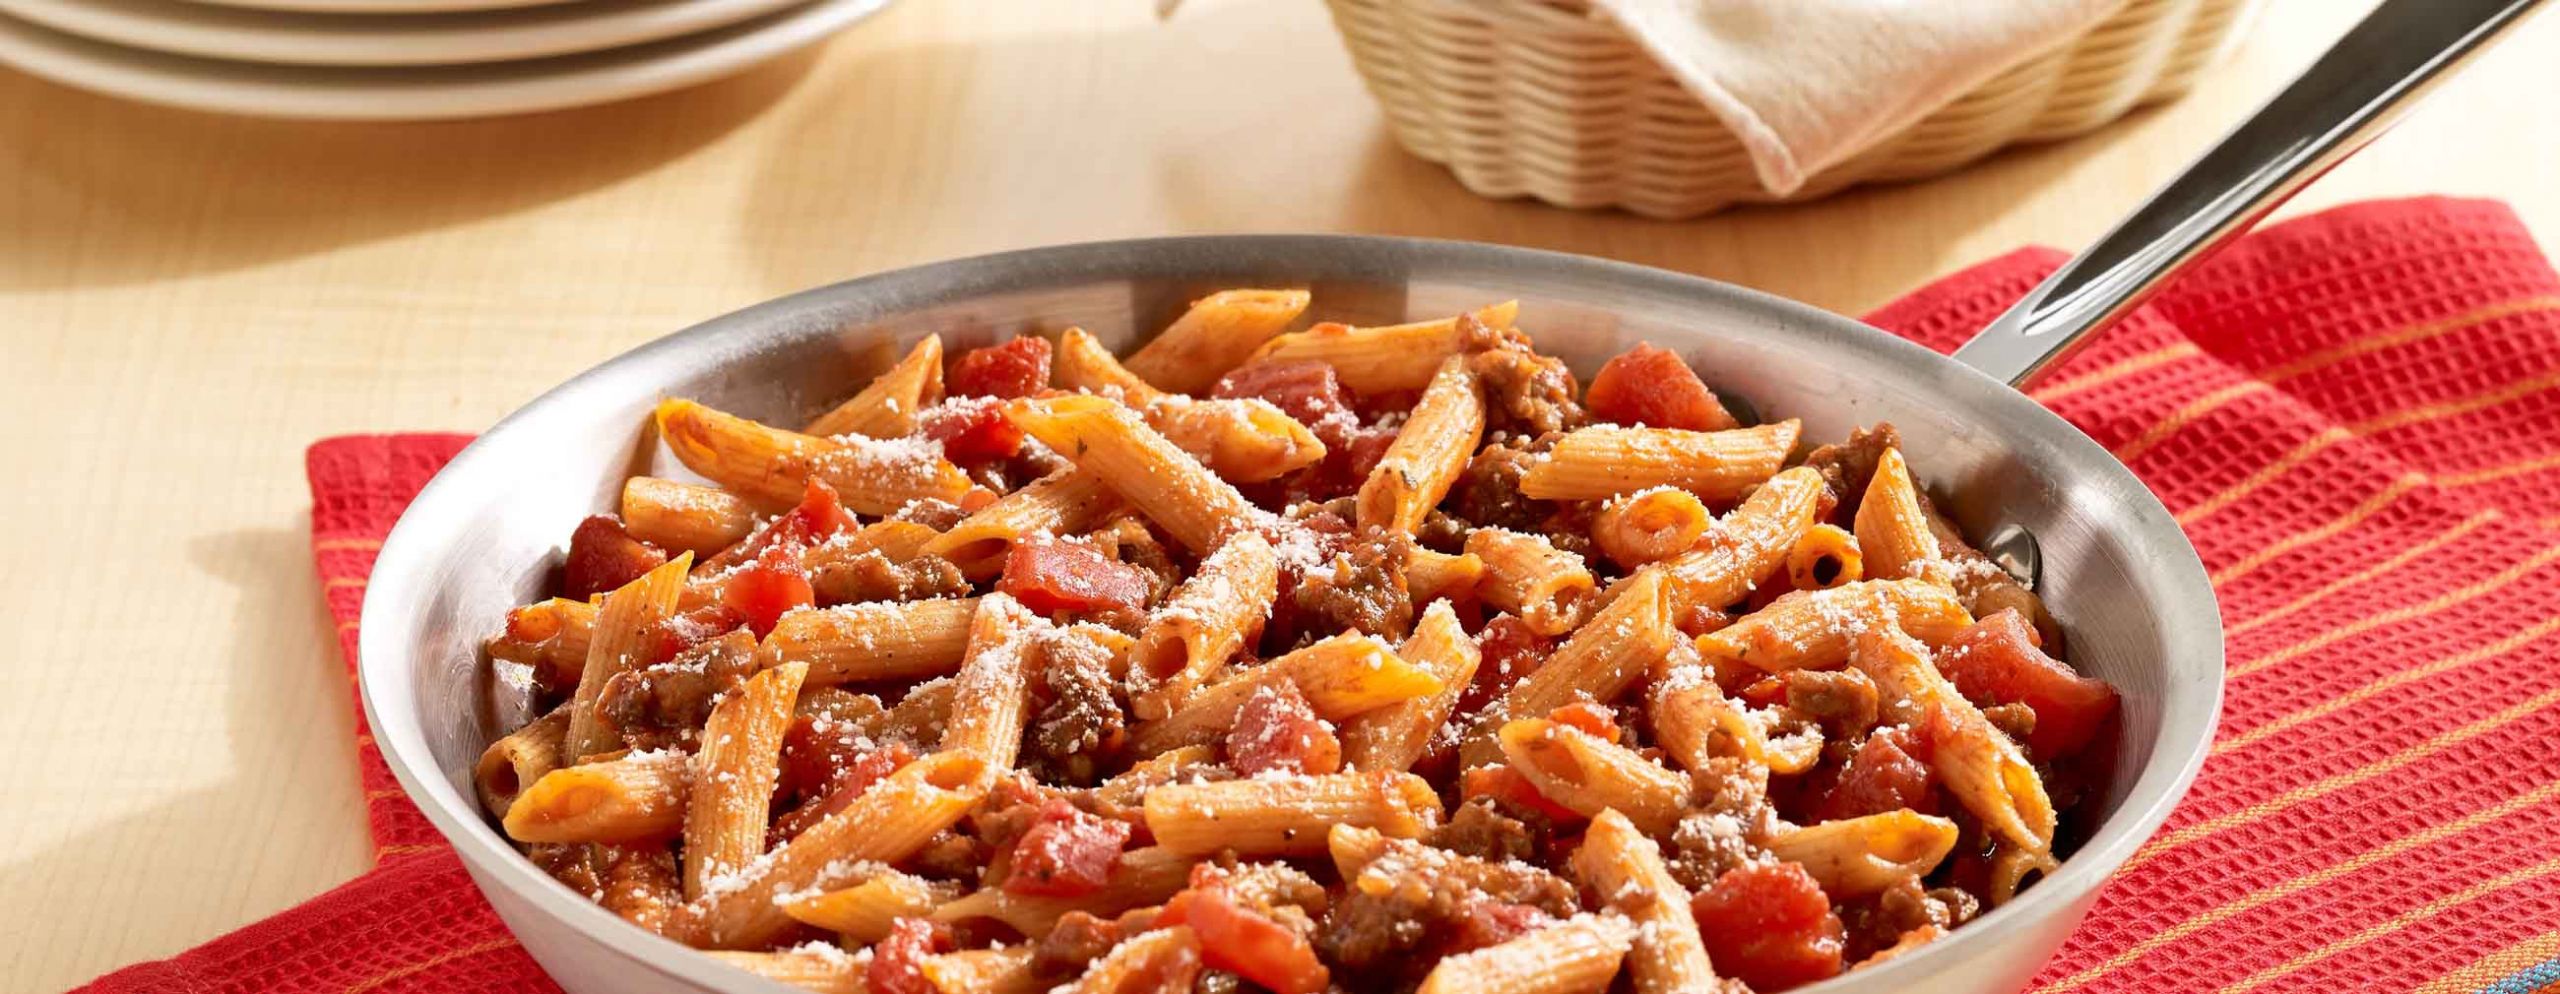 Italian Sausage And Pasta Recipes
 e Skillet Italian Sausage Pasta